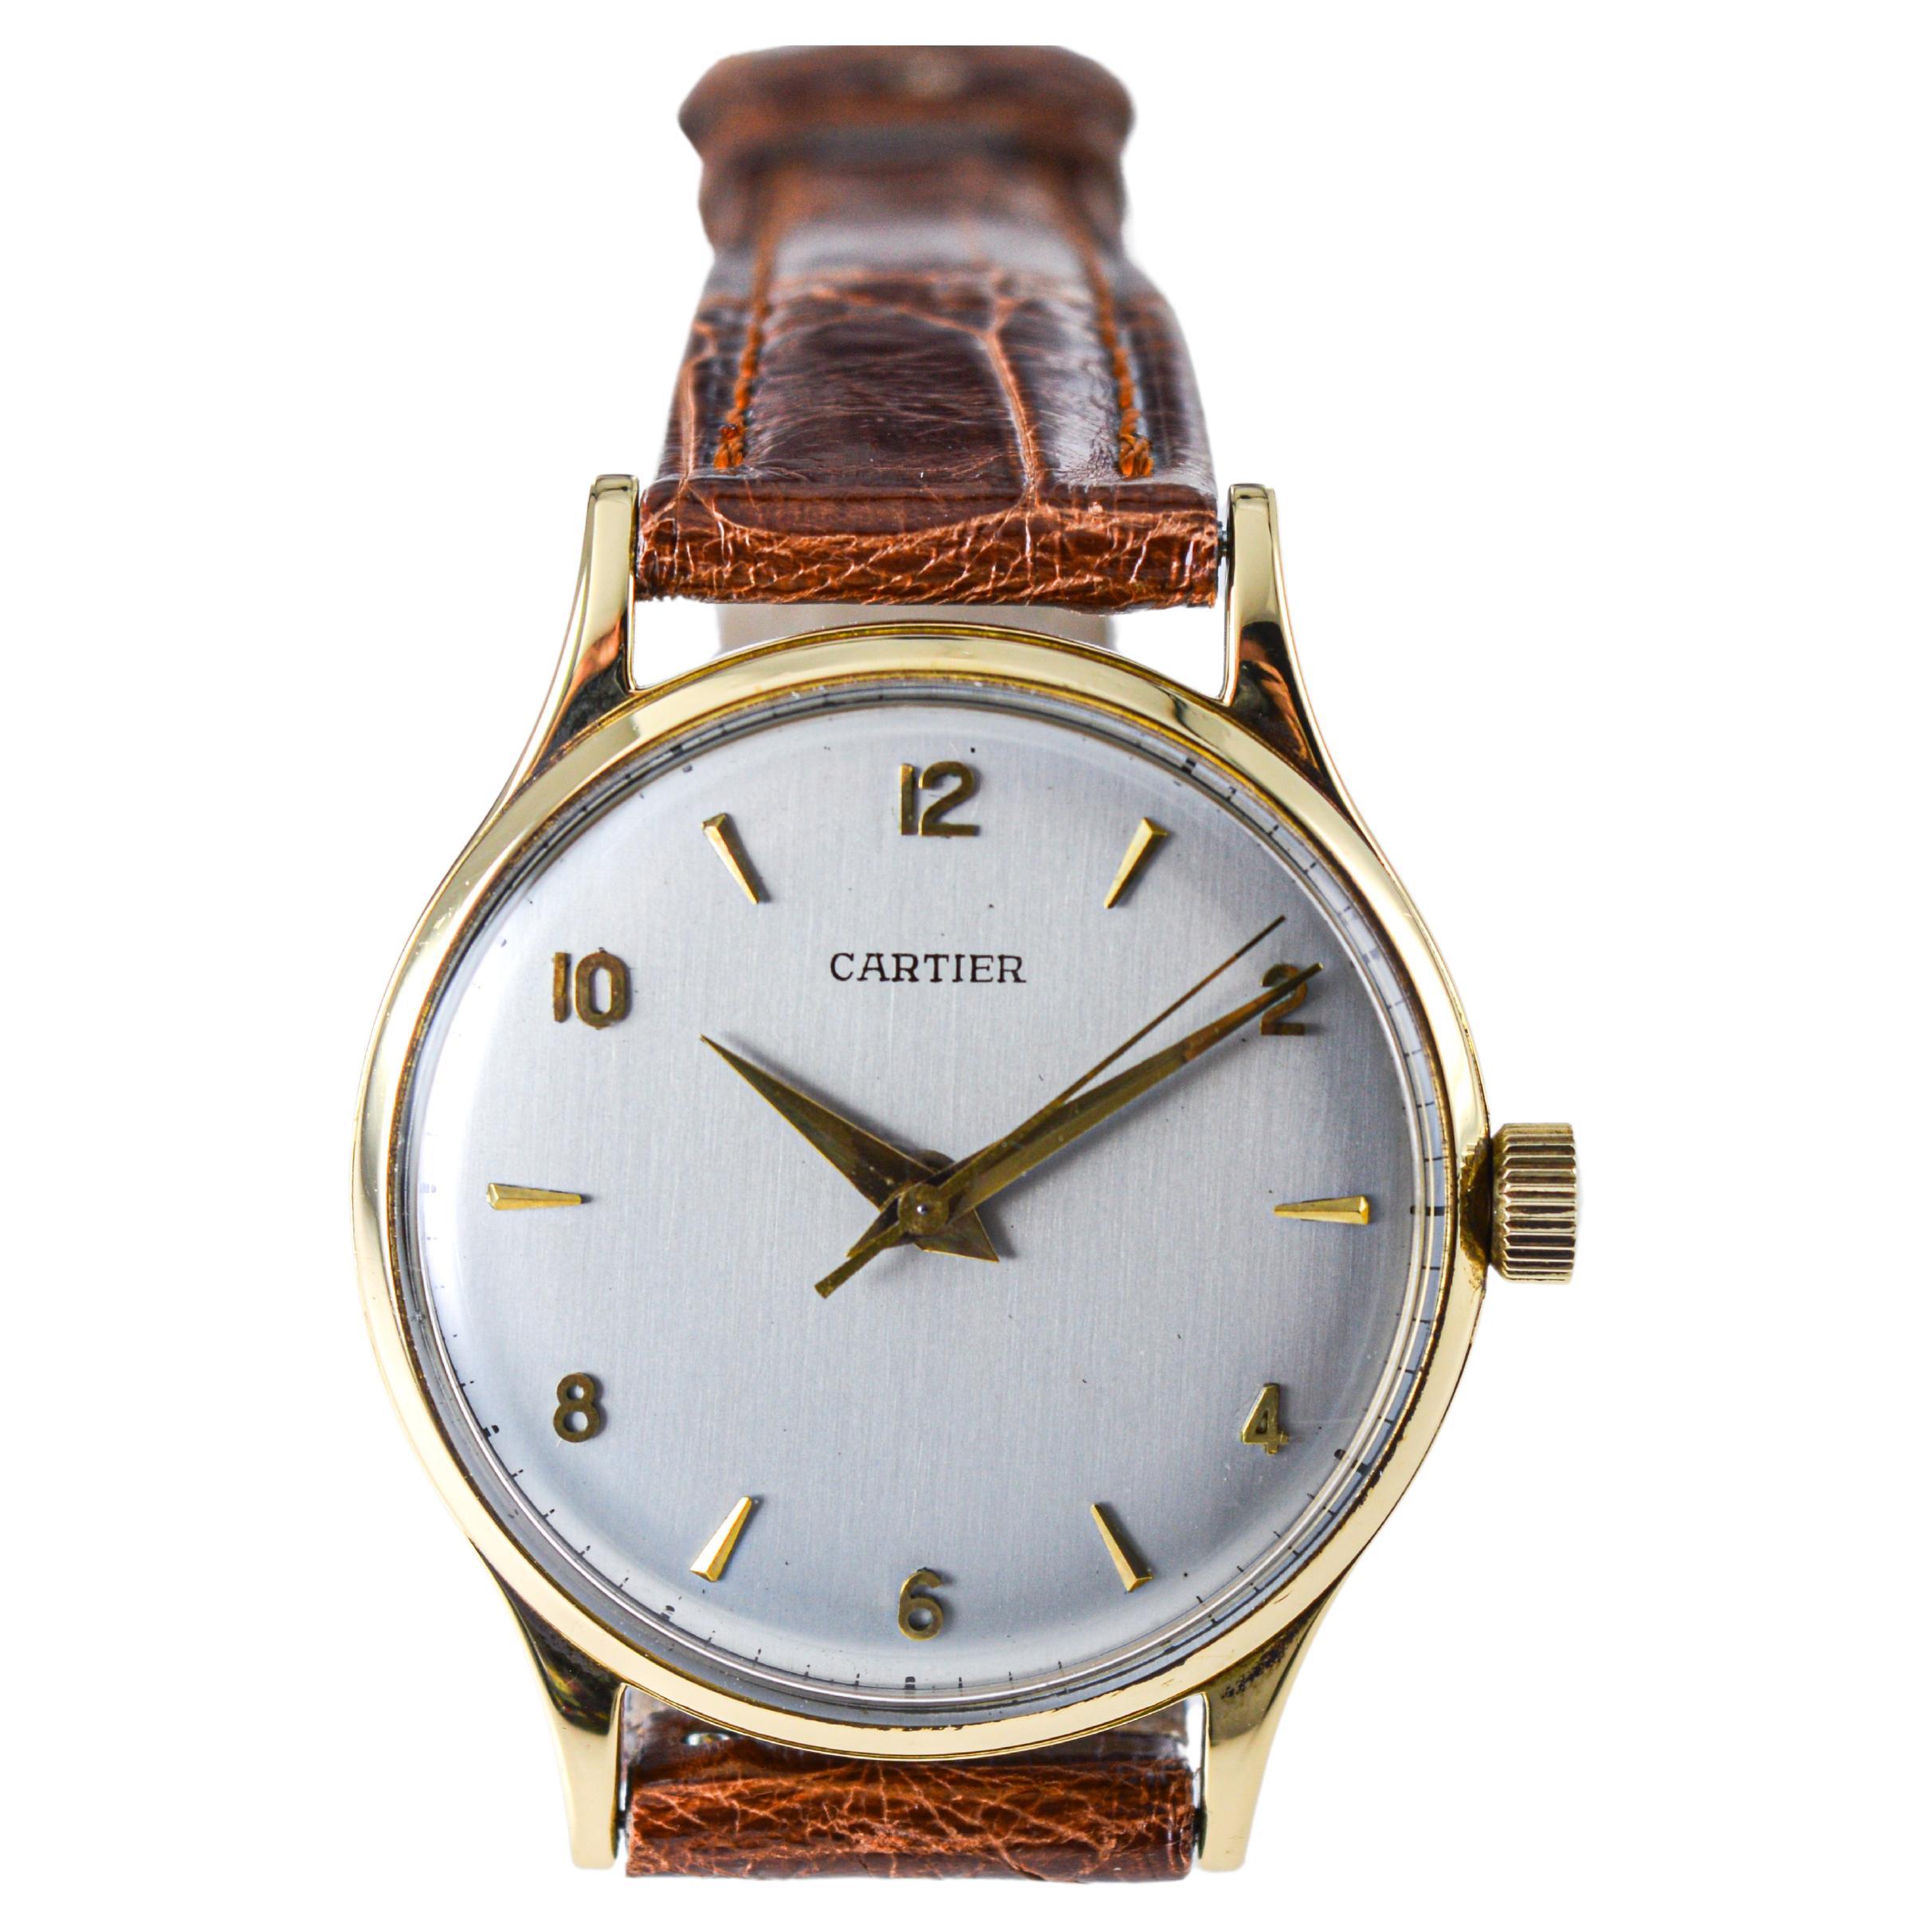 Cartier Paris 18Kt. Gold Calatrava Style Watch, from 1950's European Watch Co.  For Sale 1